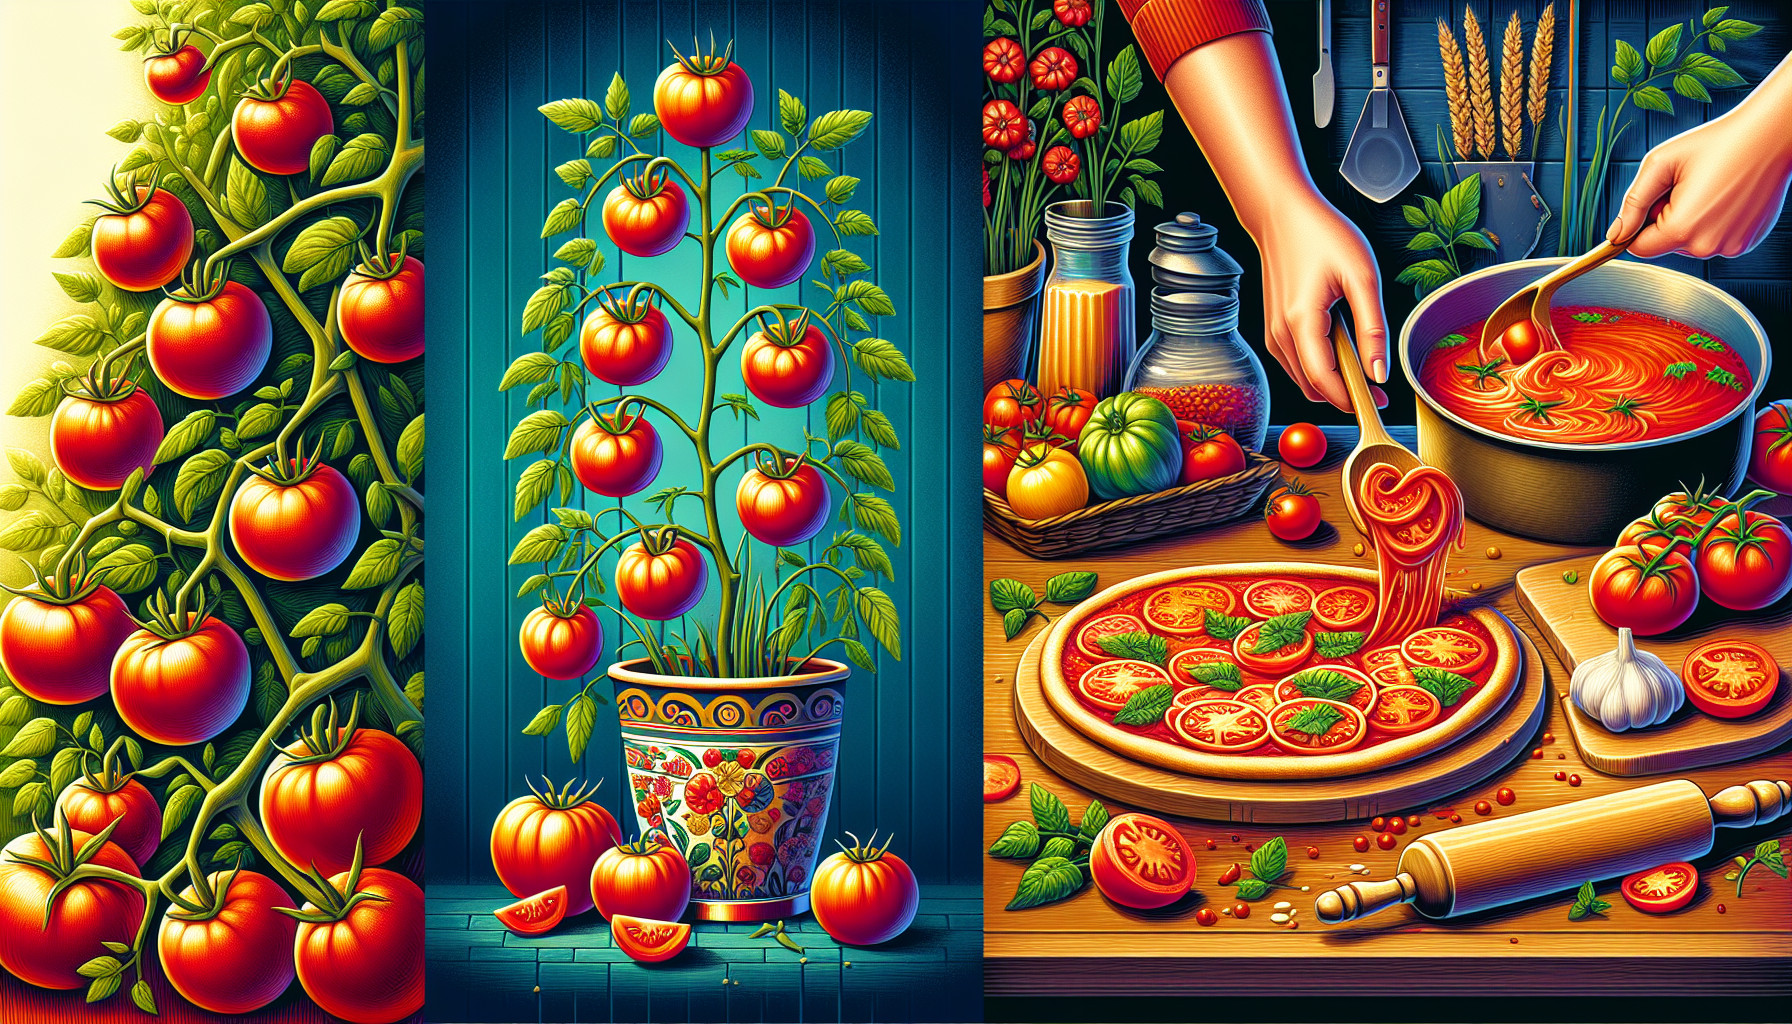 Tomatoes in European cuisine